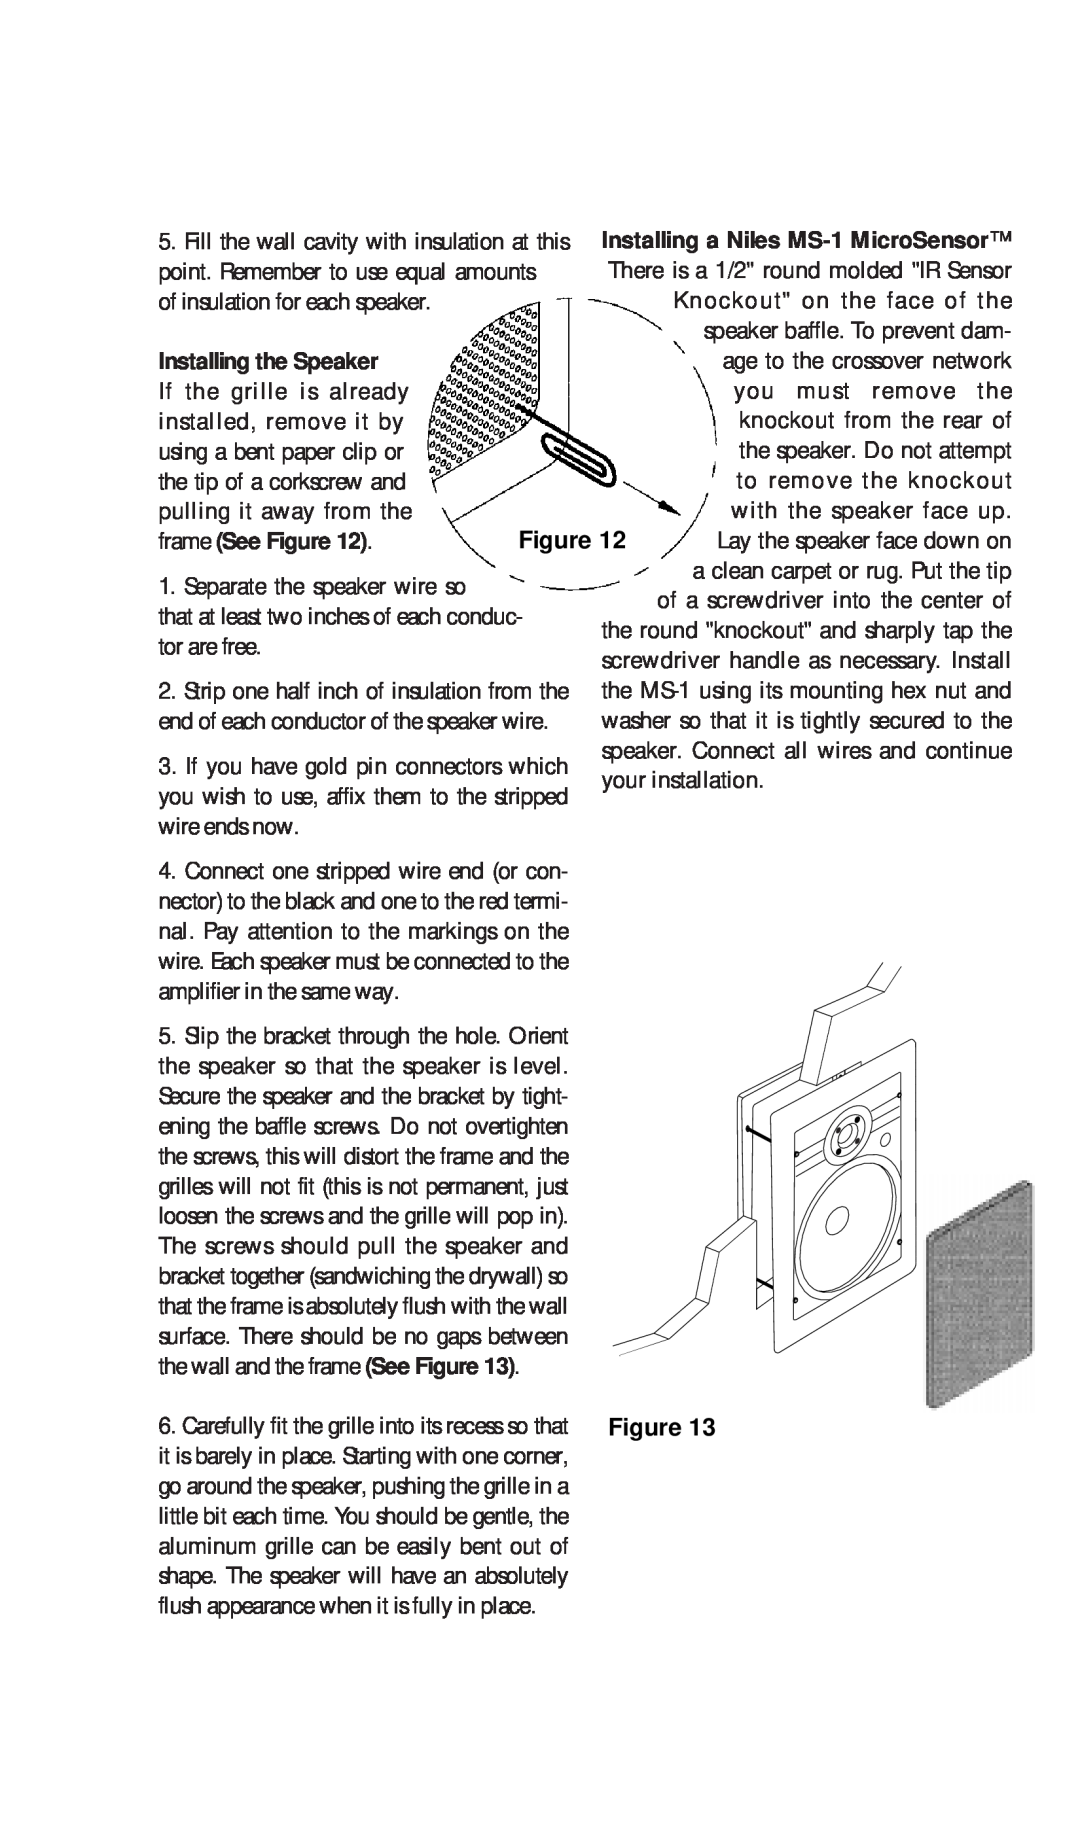 Niles Audio CS650, CS525 manual Installing the Speaker, frame See Figure 